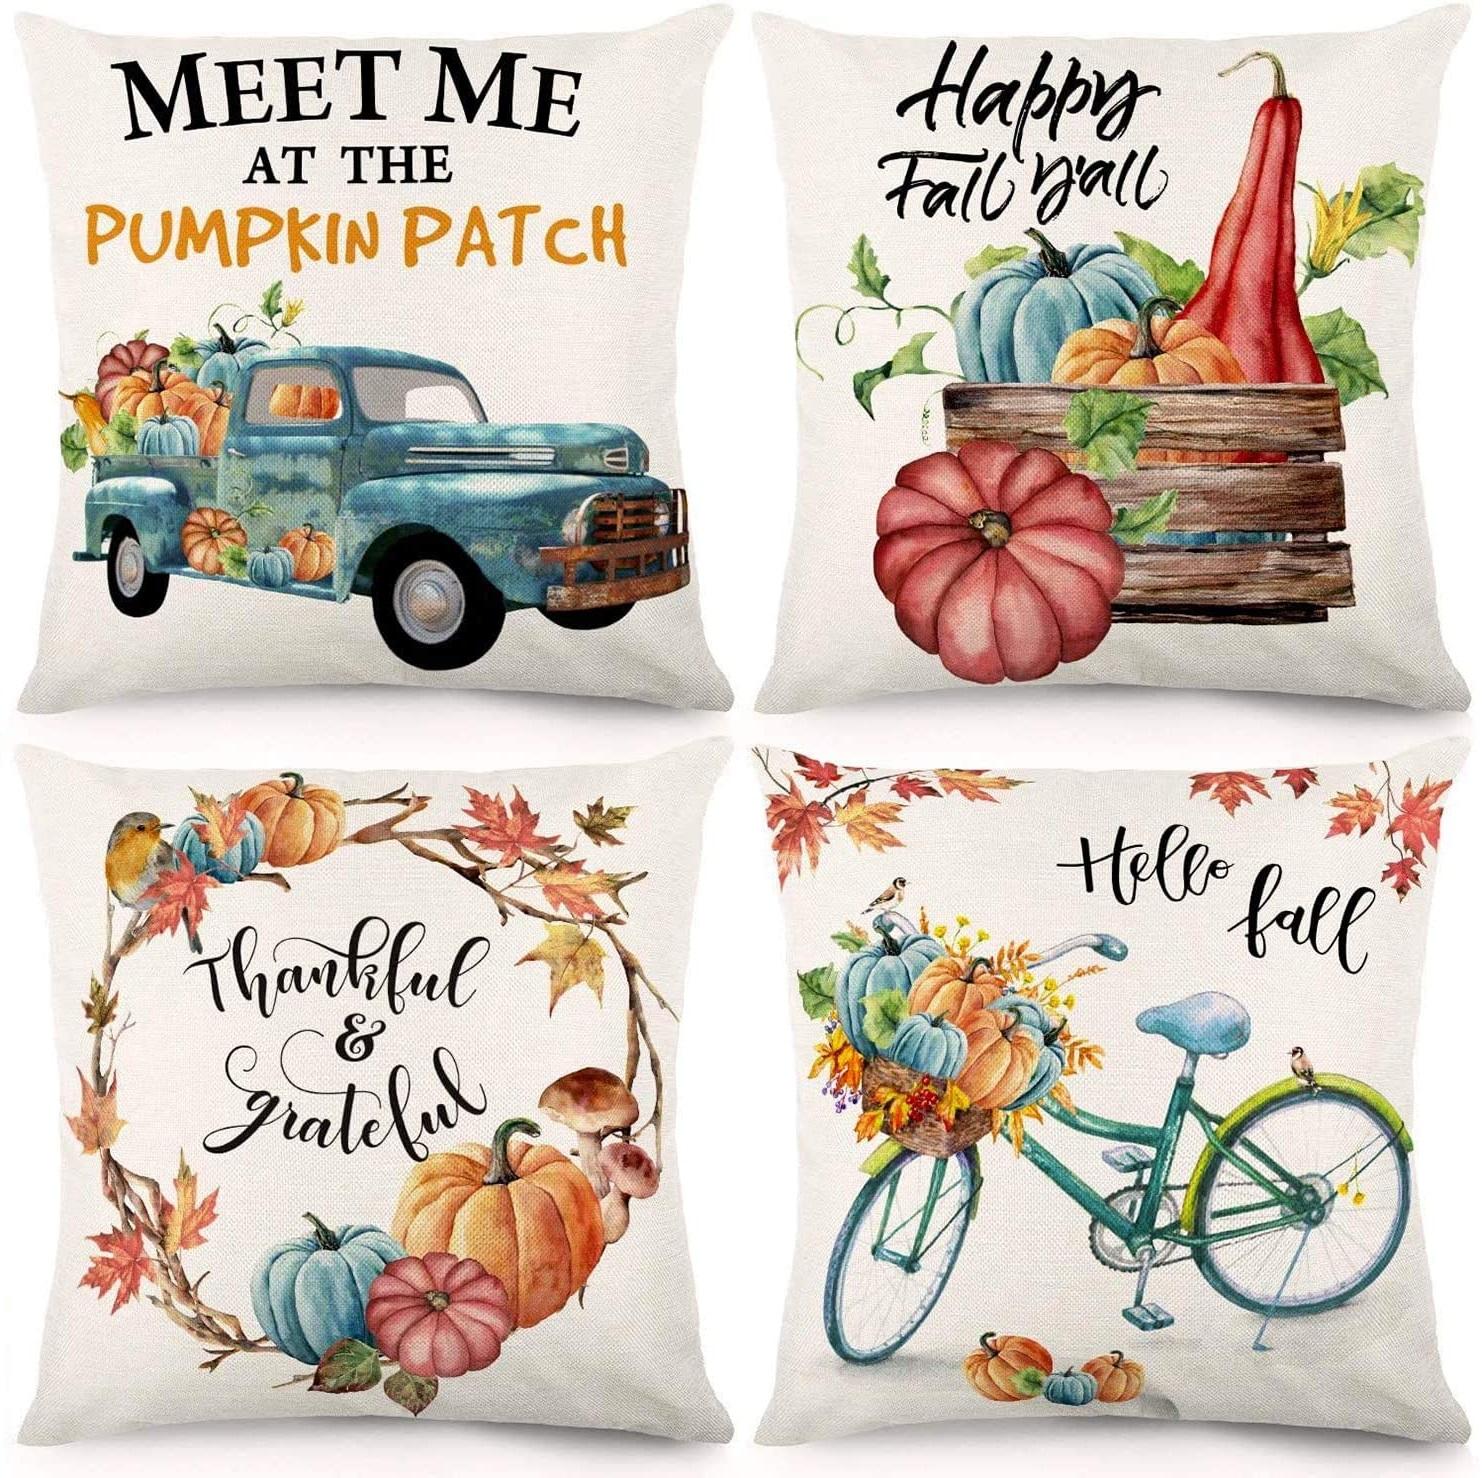 

Fall Throw Pillow Covers 18x18 Inches Pumpkin Thanksgiving Farmhouse Decorative Autumn Pillowcase Cotton Linen Cushion Case for Home Decor, As picure